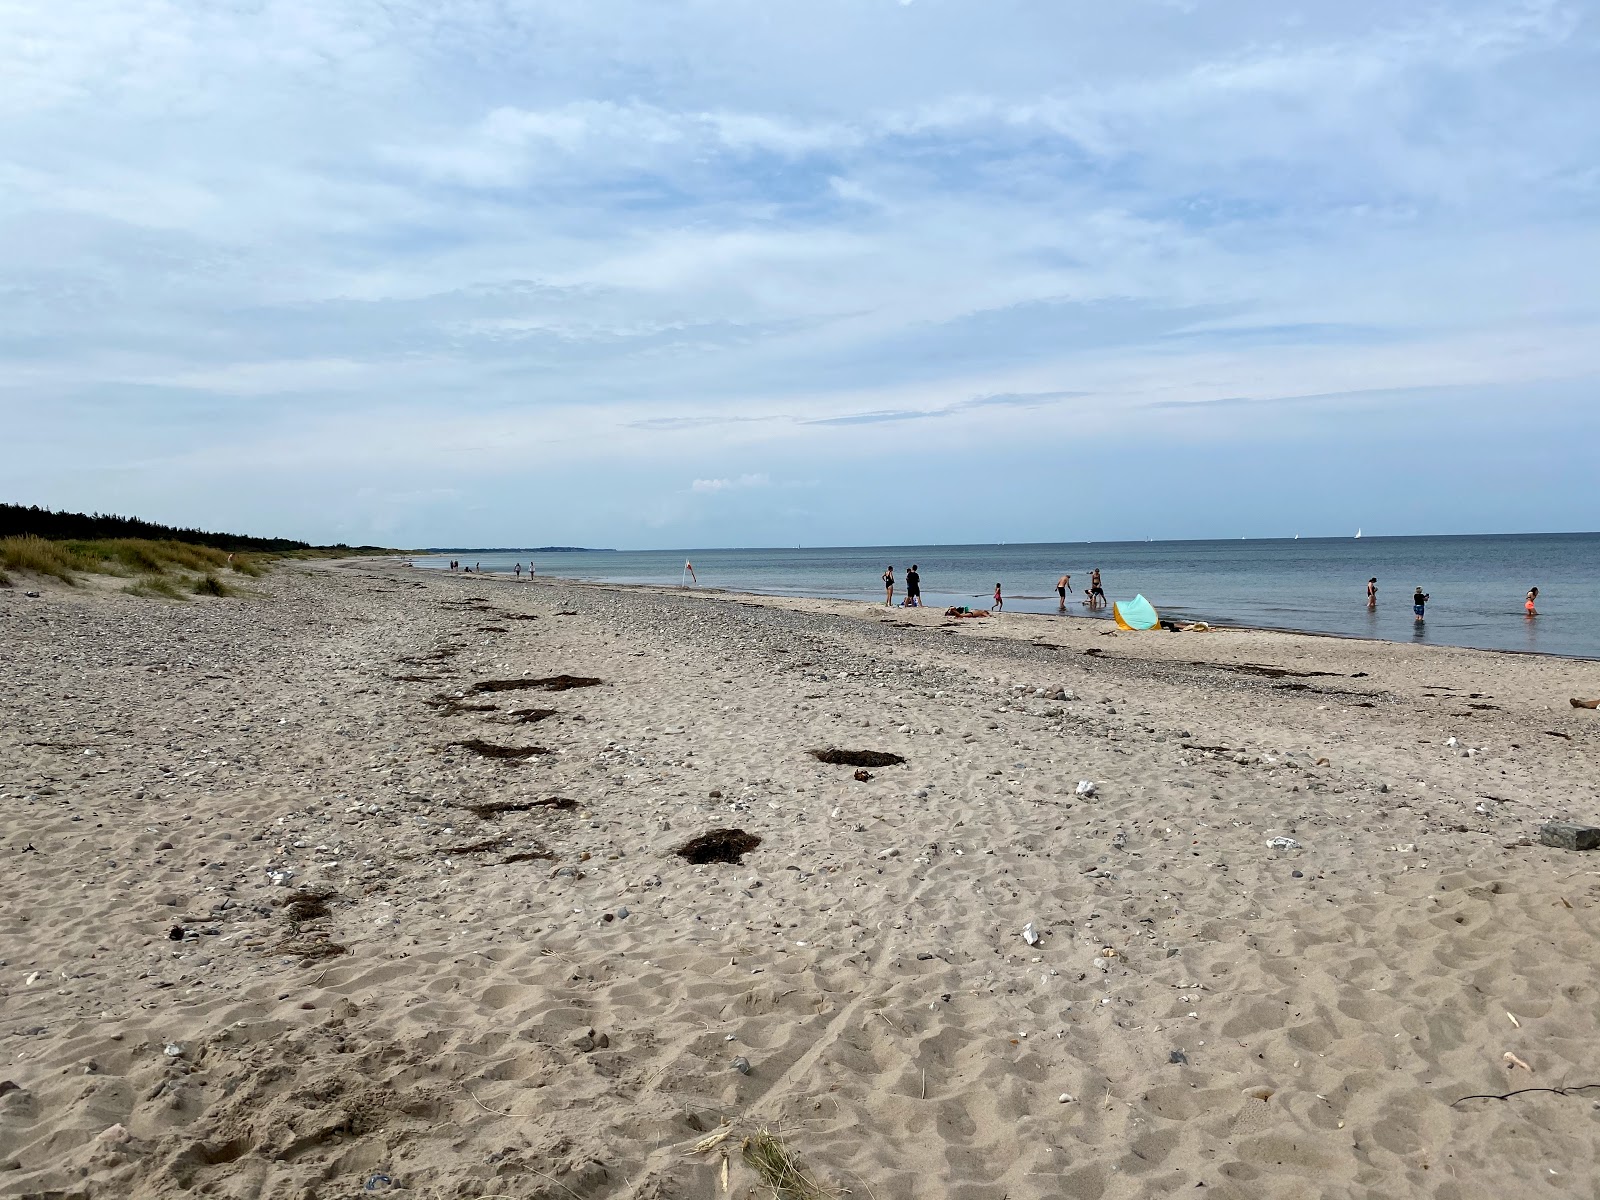 Foto de Tisvildeleje Beach - lugar popular entre os apreciadores de relaxamento